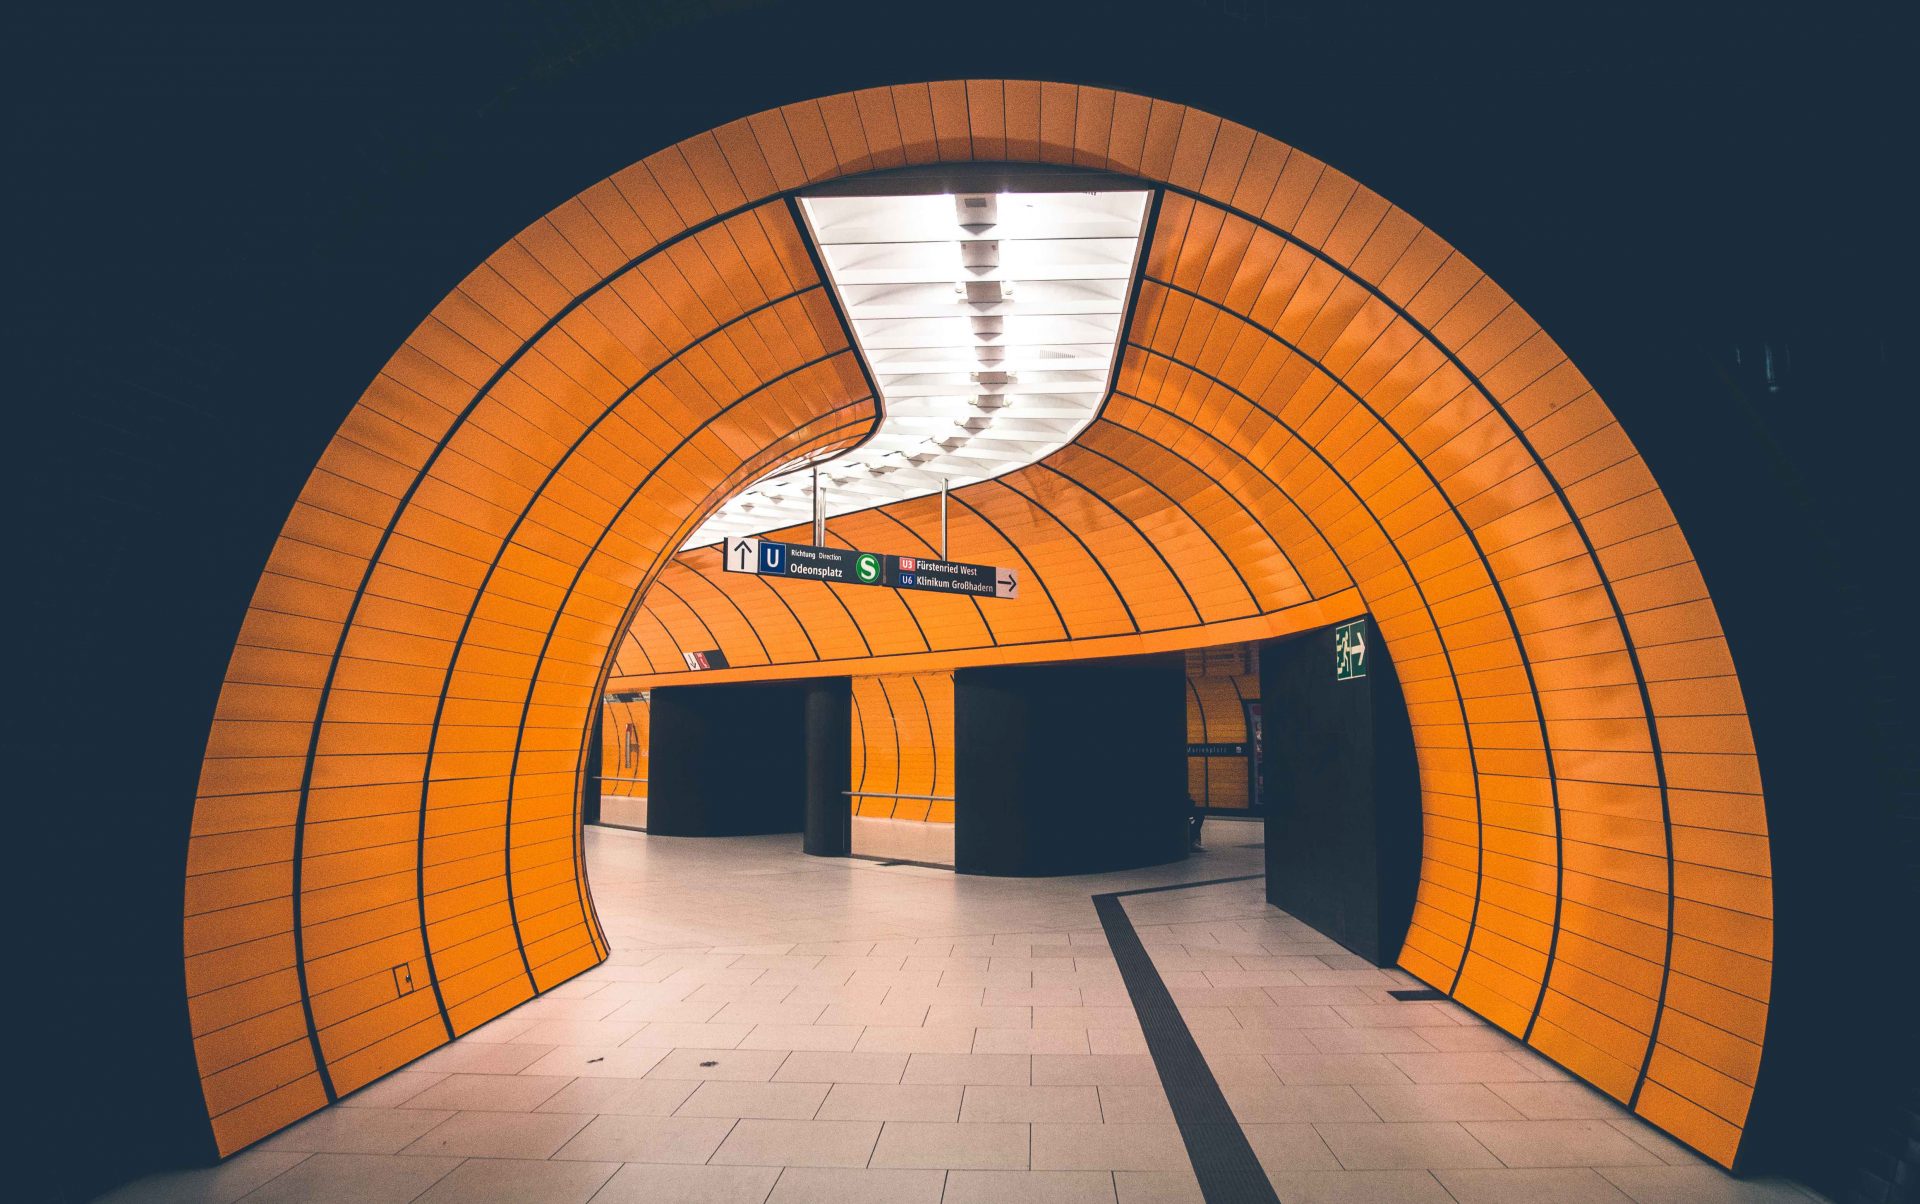 Image of the German Metro, via Unsplash